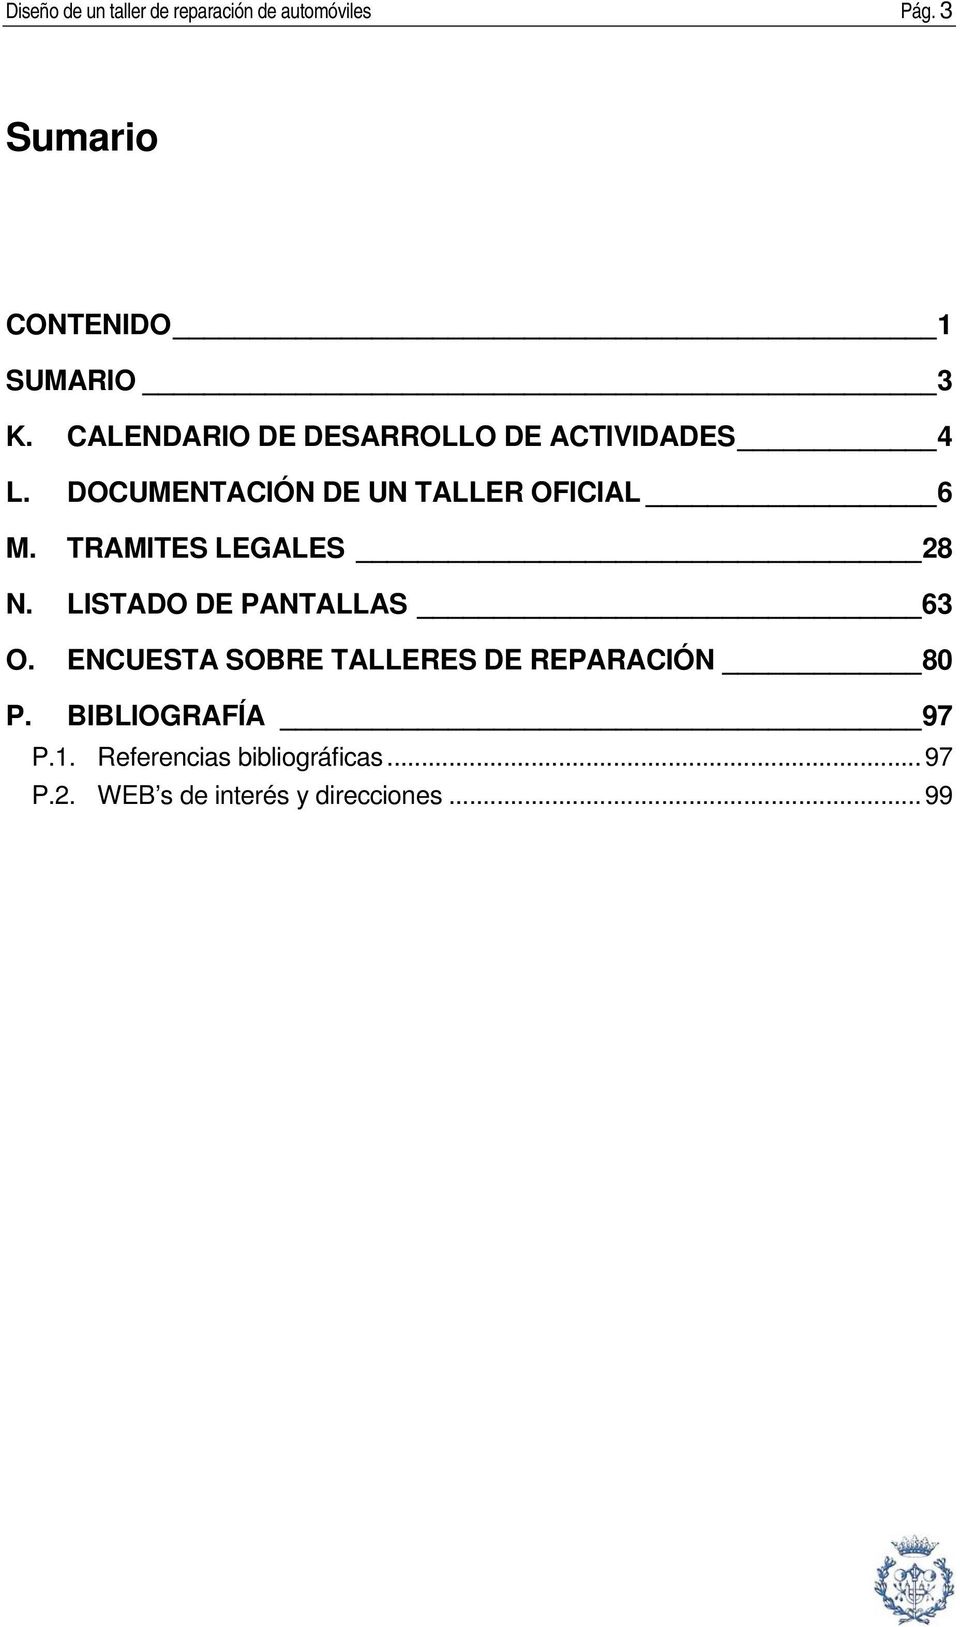 TRAMITES LEGALES 28 N. LISTADO DE PANTALLAS 63 O.